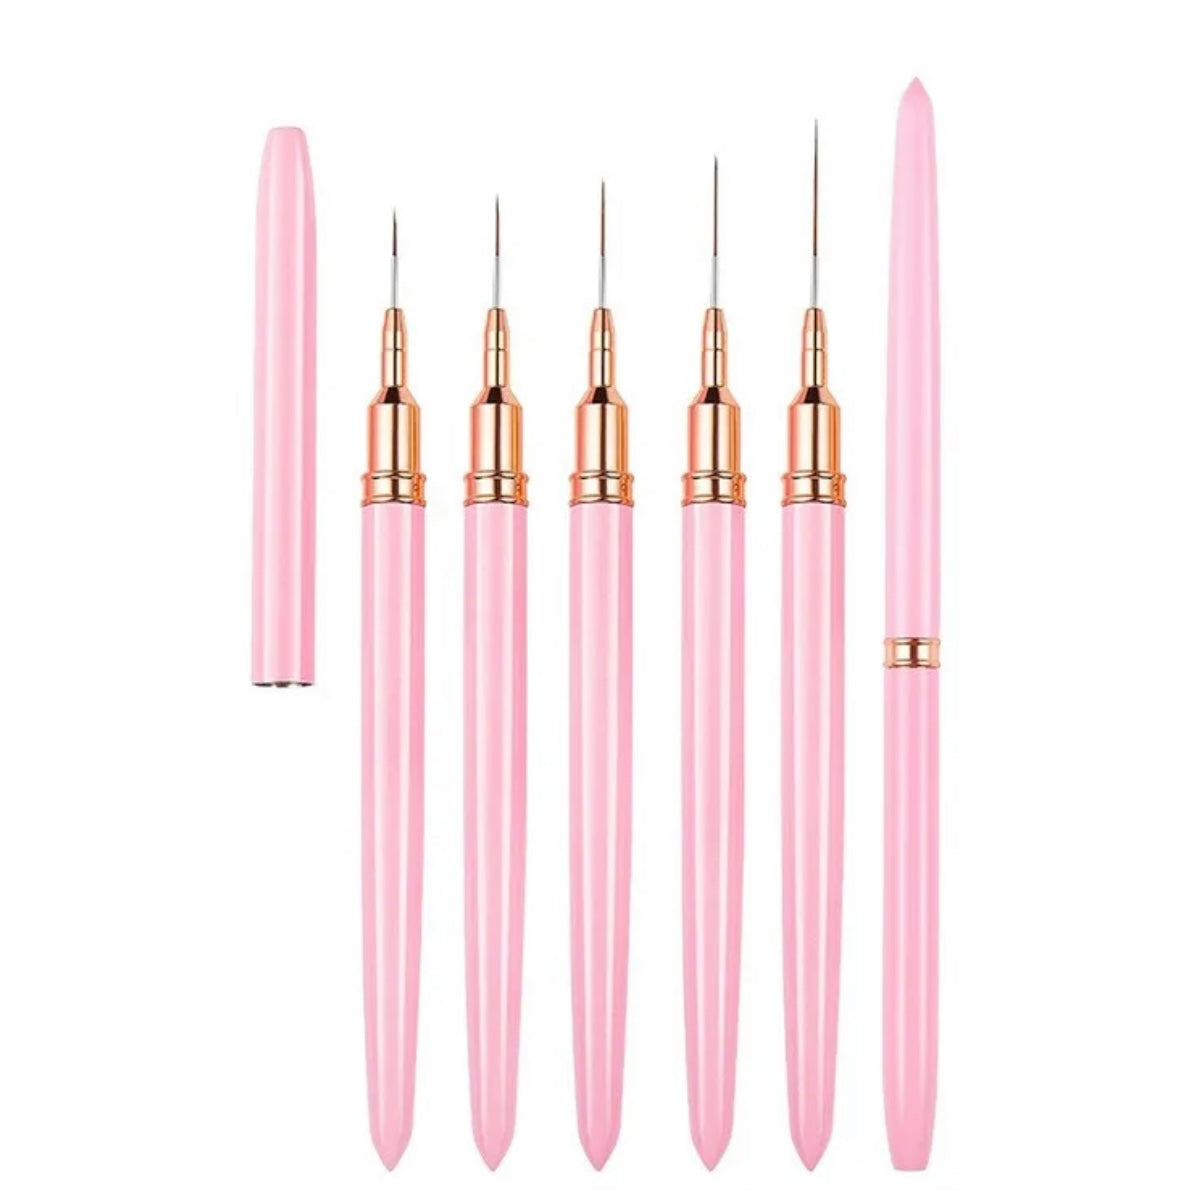 Pink Nail Art Brush - 20mm